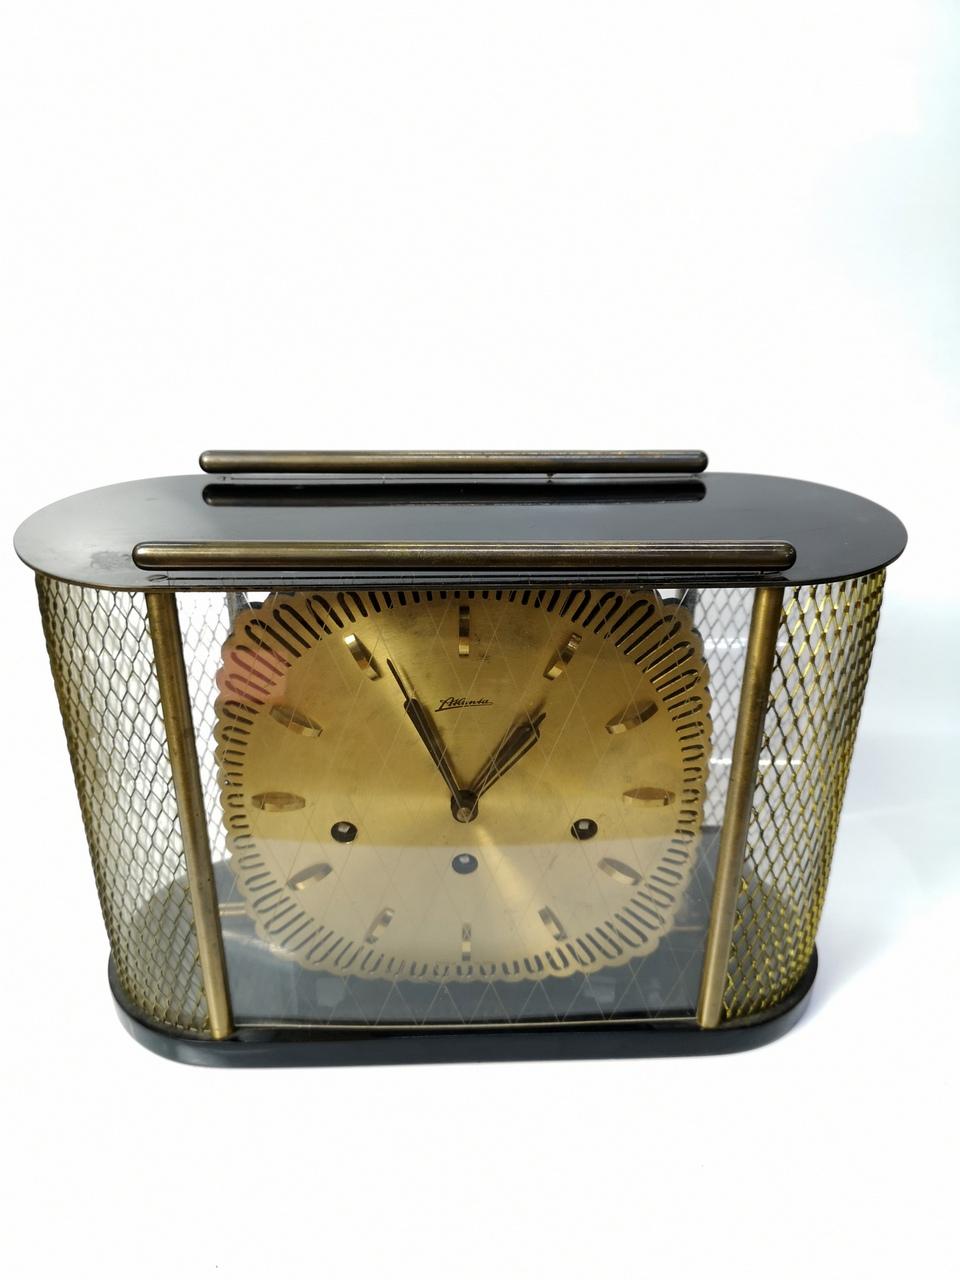 Mid-Century Modern table clock, by Atlanta, 1950s.